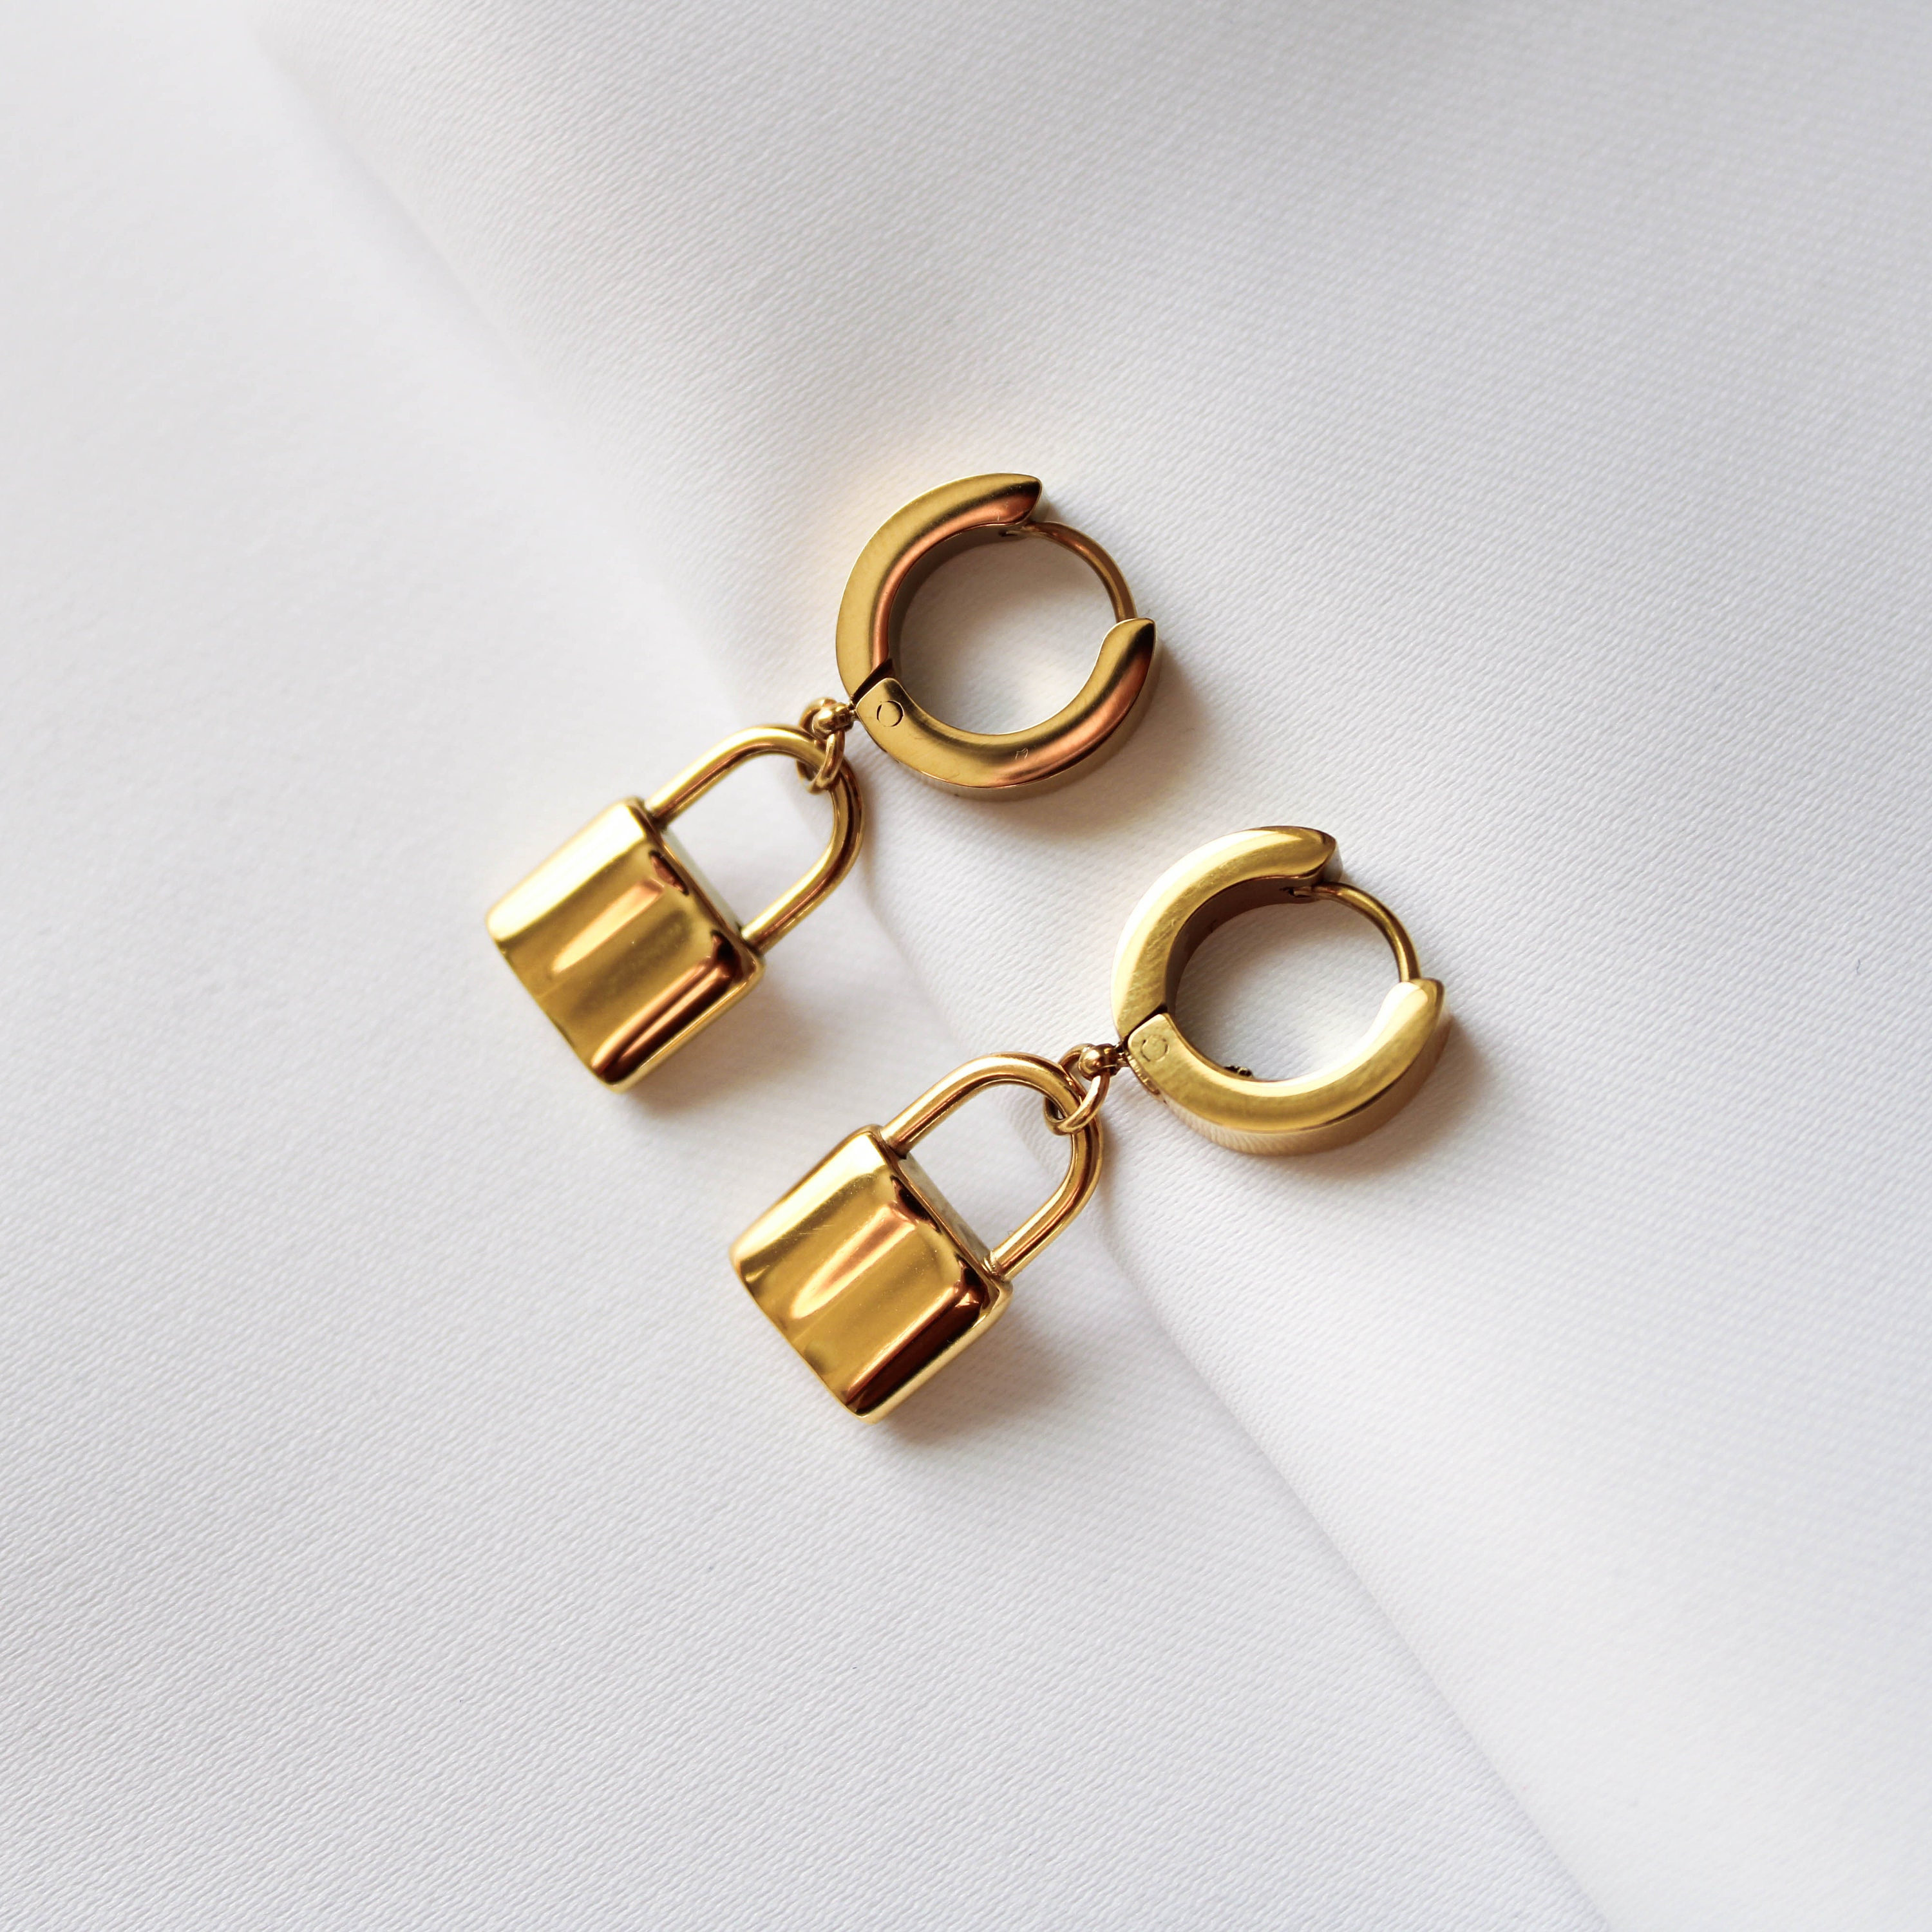 Tiffany Lock Earrings in Yellow Gold, Medium | Tiffany & Co.